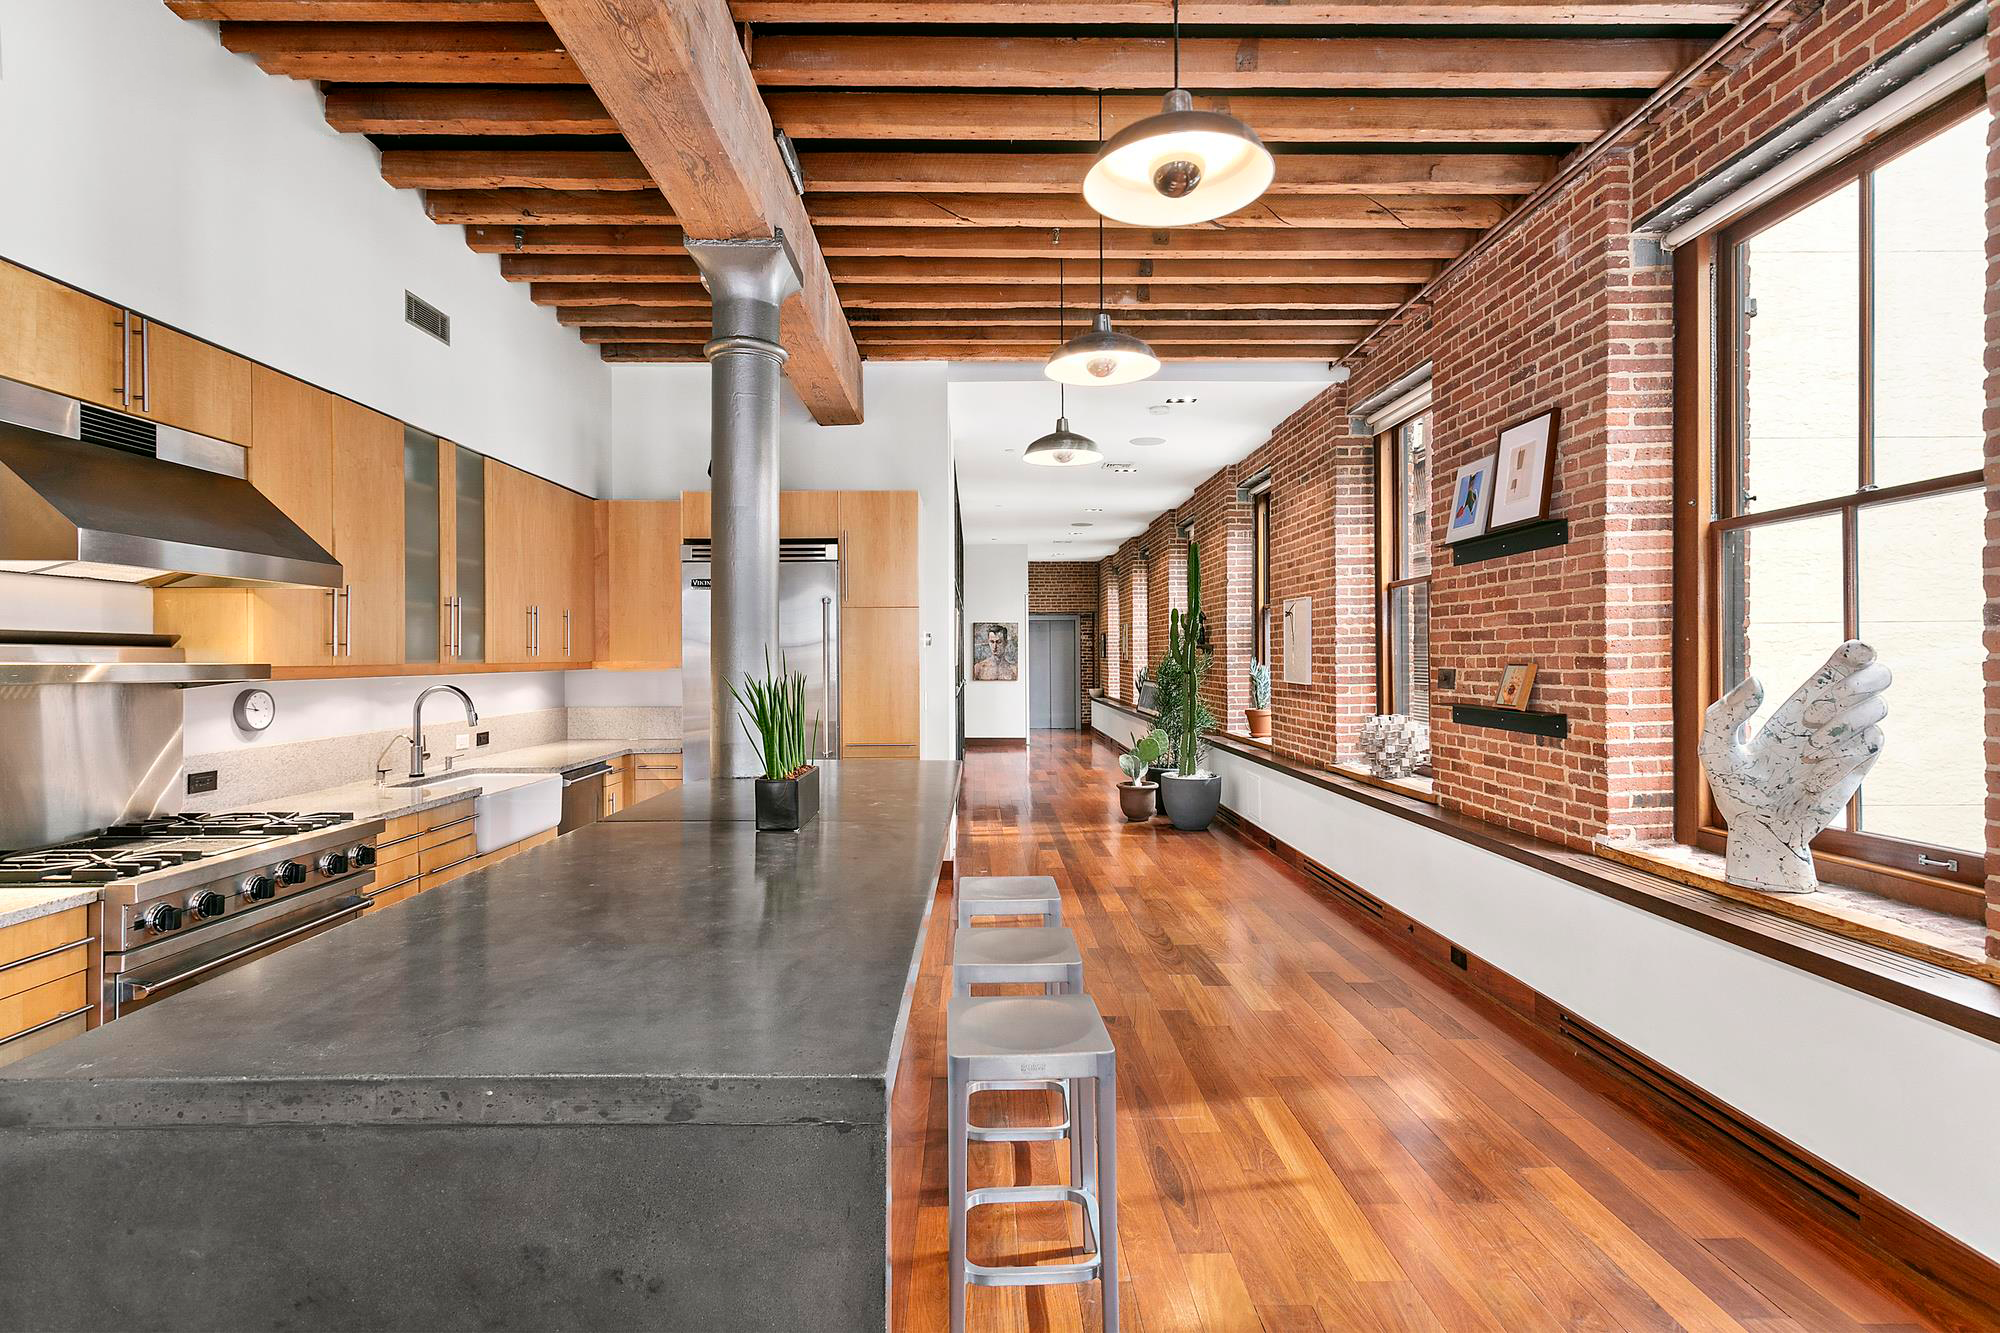 A 3,000 sq ft artist's loft in Manhattan lists for $4m